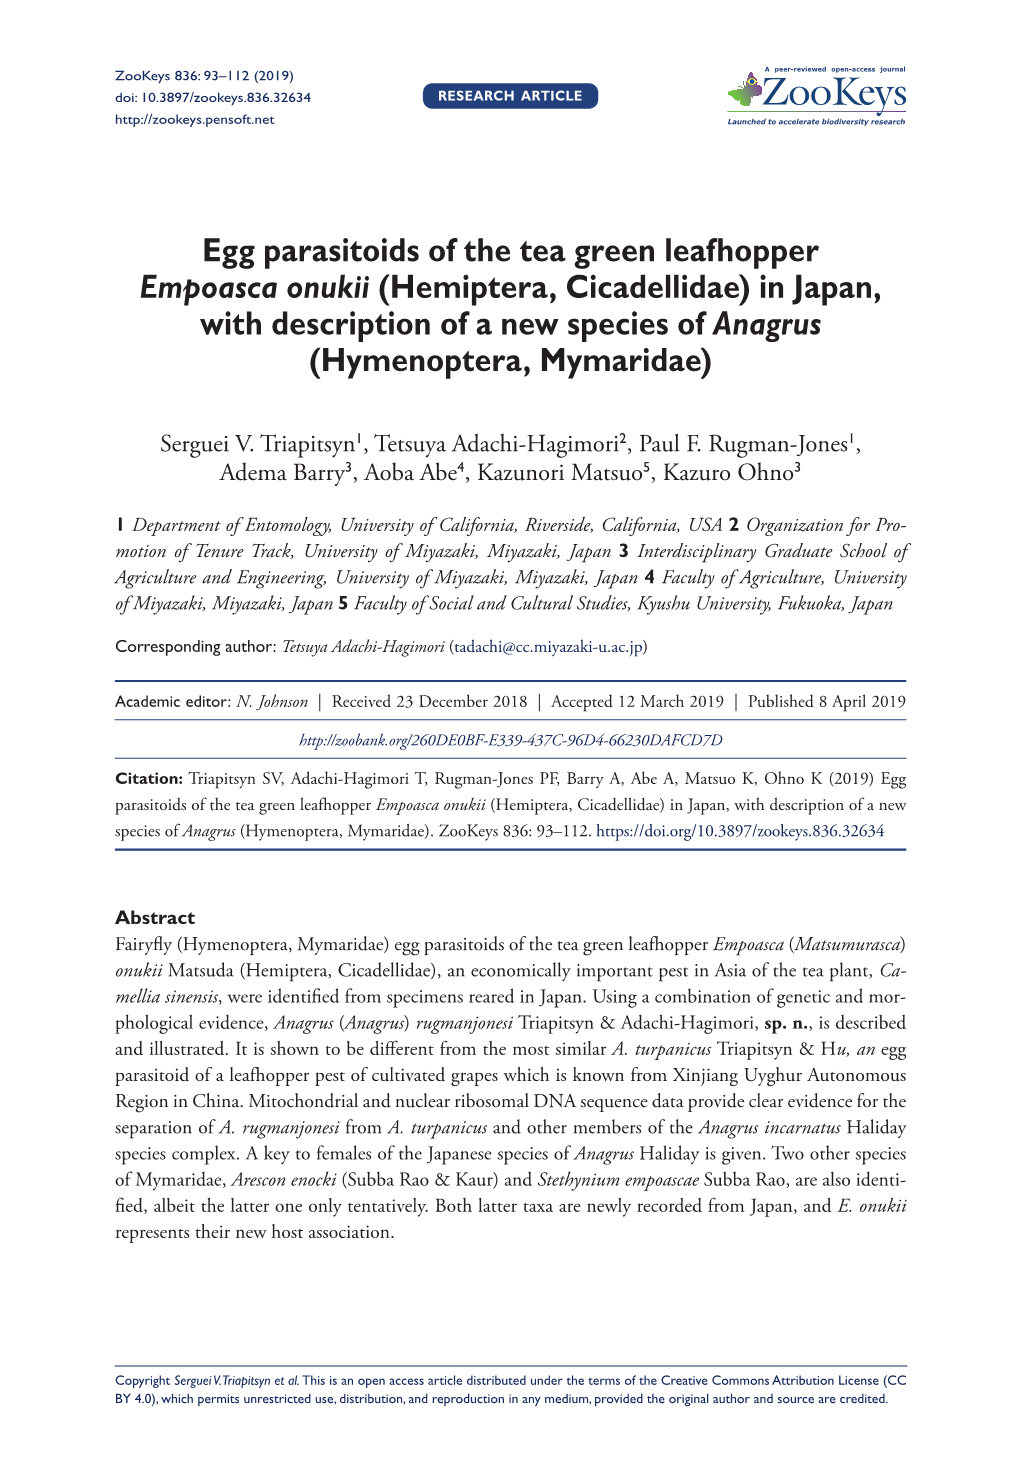 Egg Parasitoids of the Tea Green Leafhopper Empoasca Onukii (Hemiptera, Cicadellidae) in Japan, with Description of a New Species of Anagrus (Hymenoptera, Mymaridae)